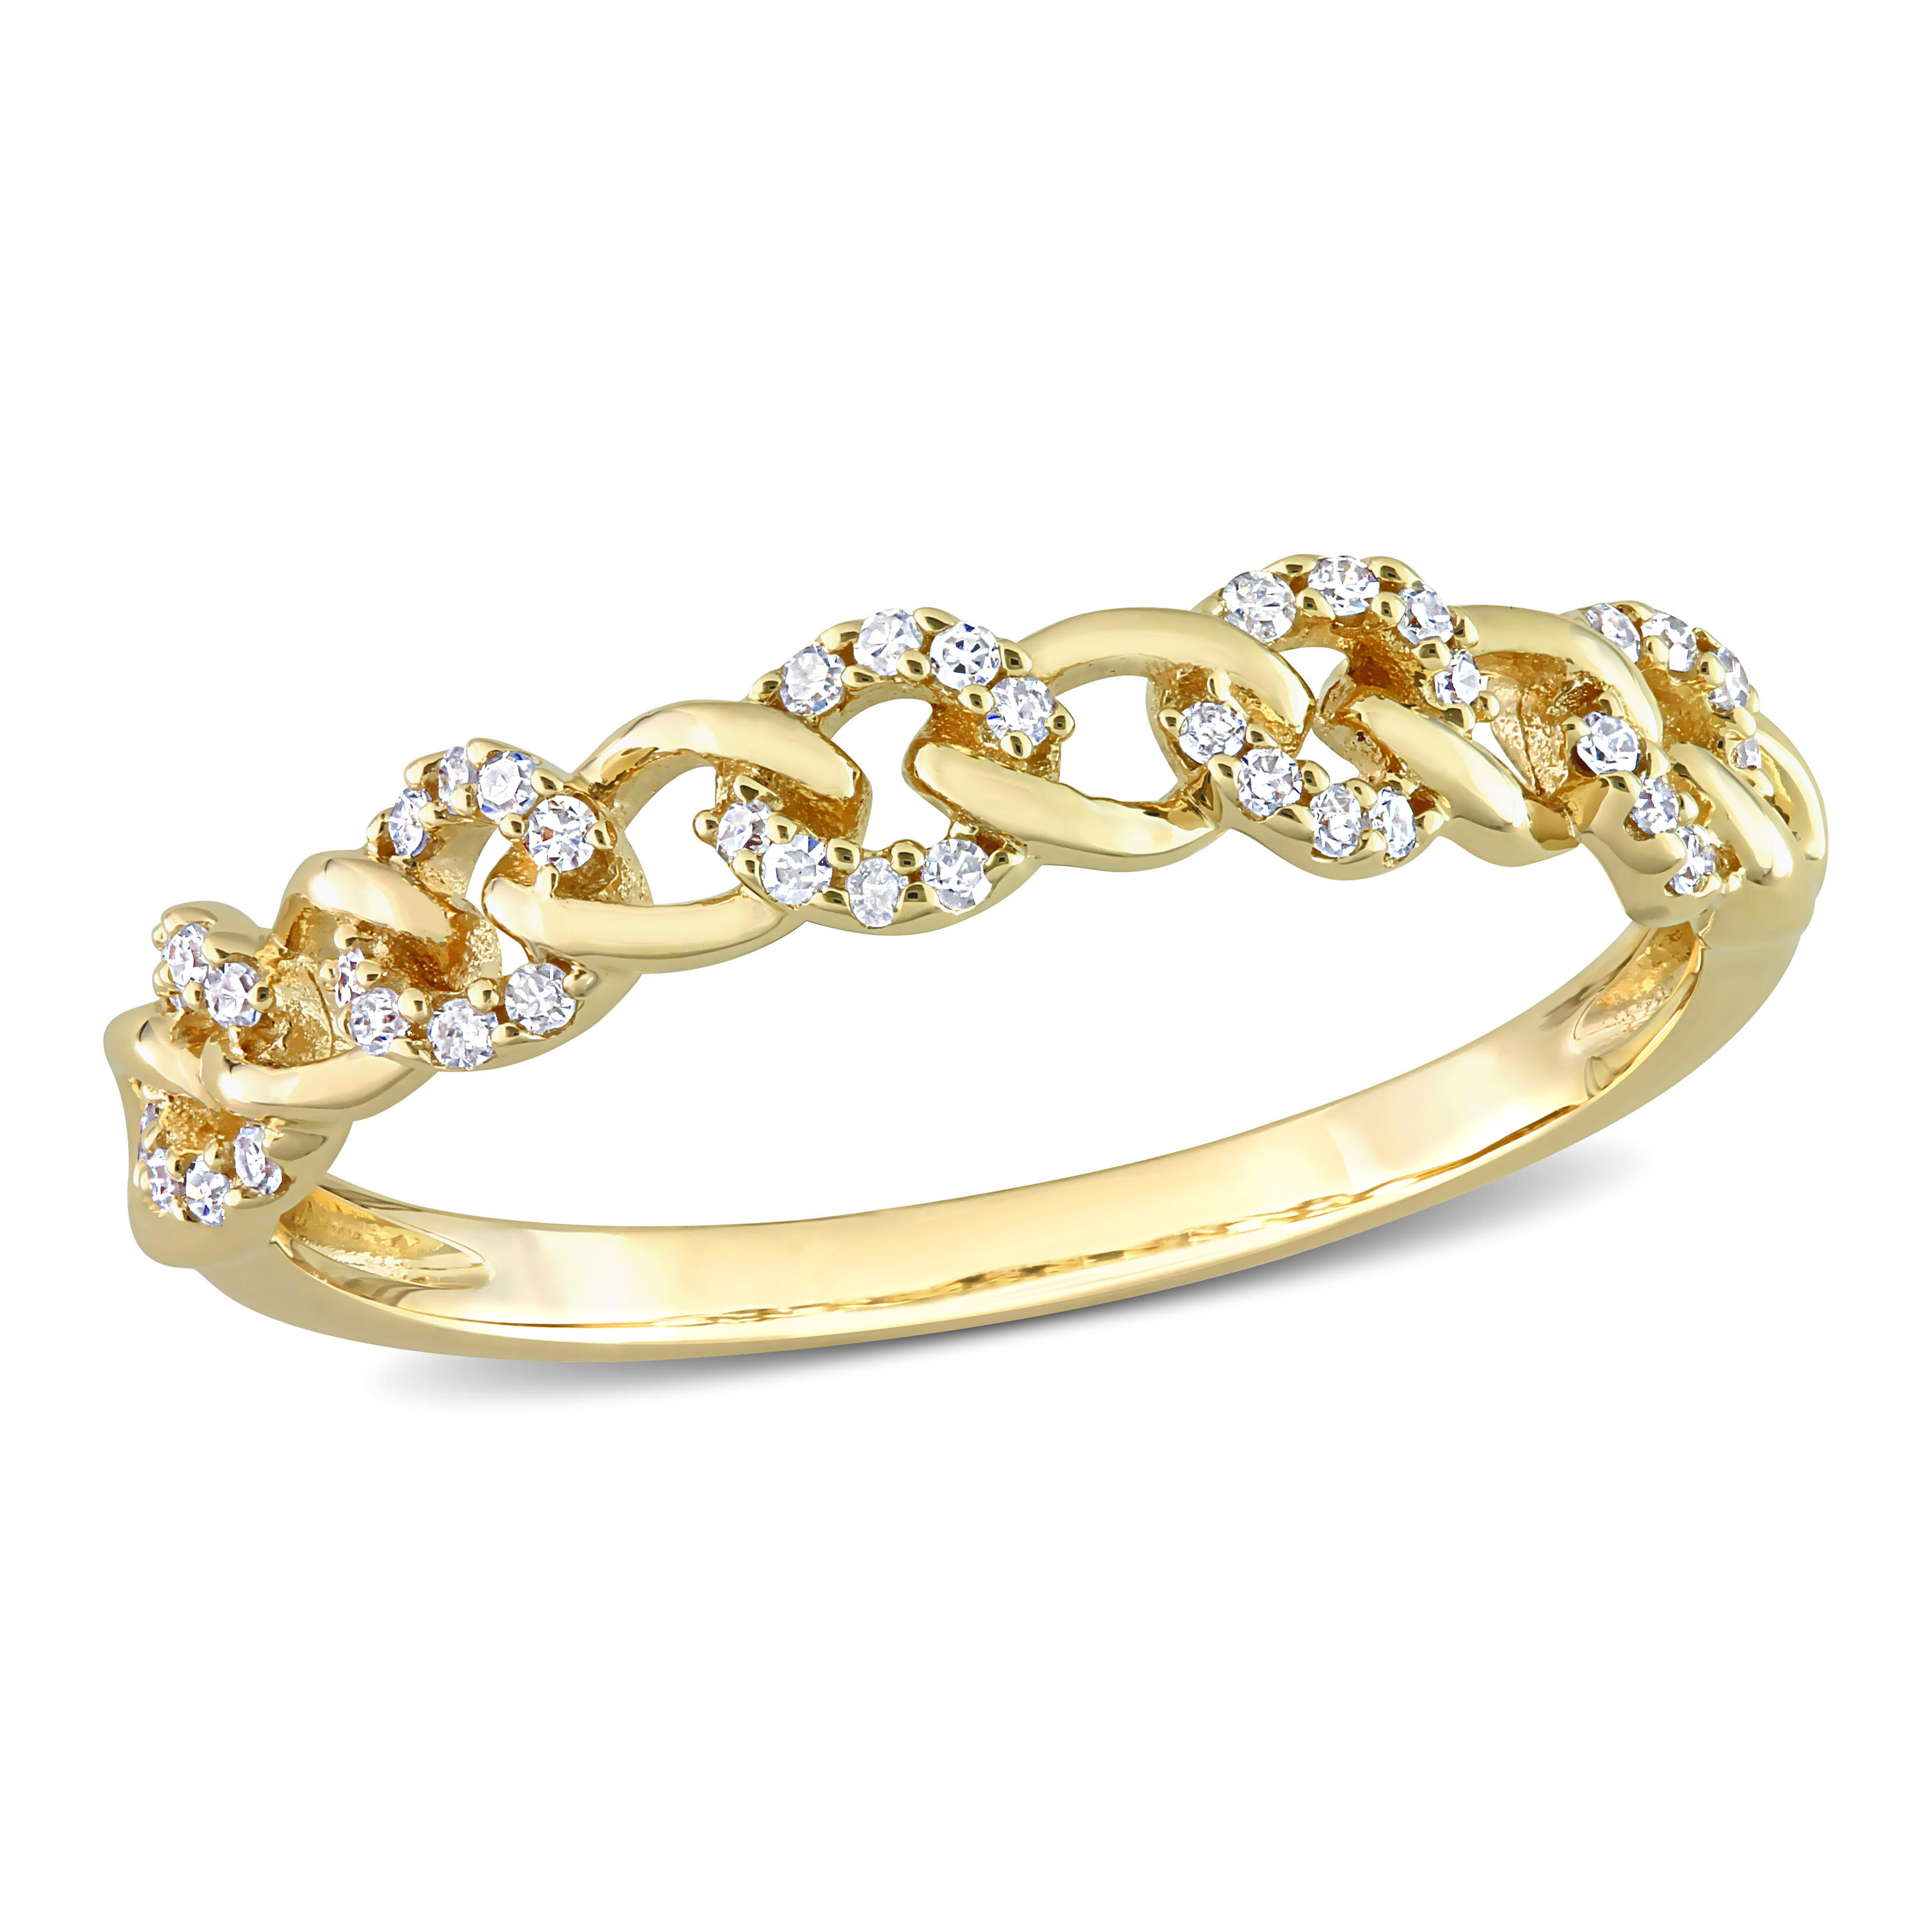 1/8 CT TDW Diamond Link Ring in 14k Yellow Gold